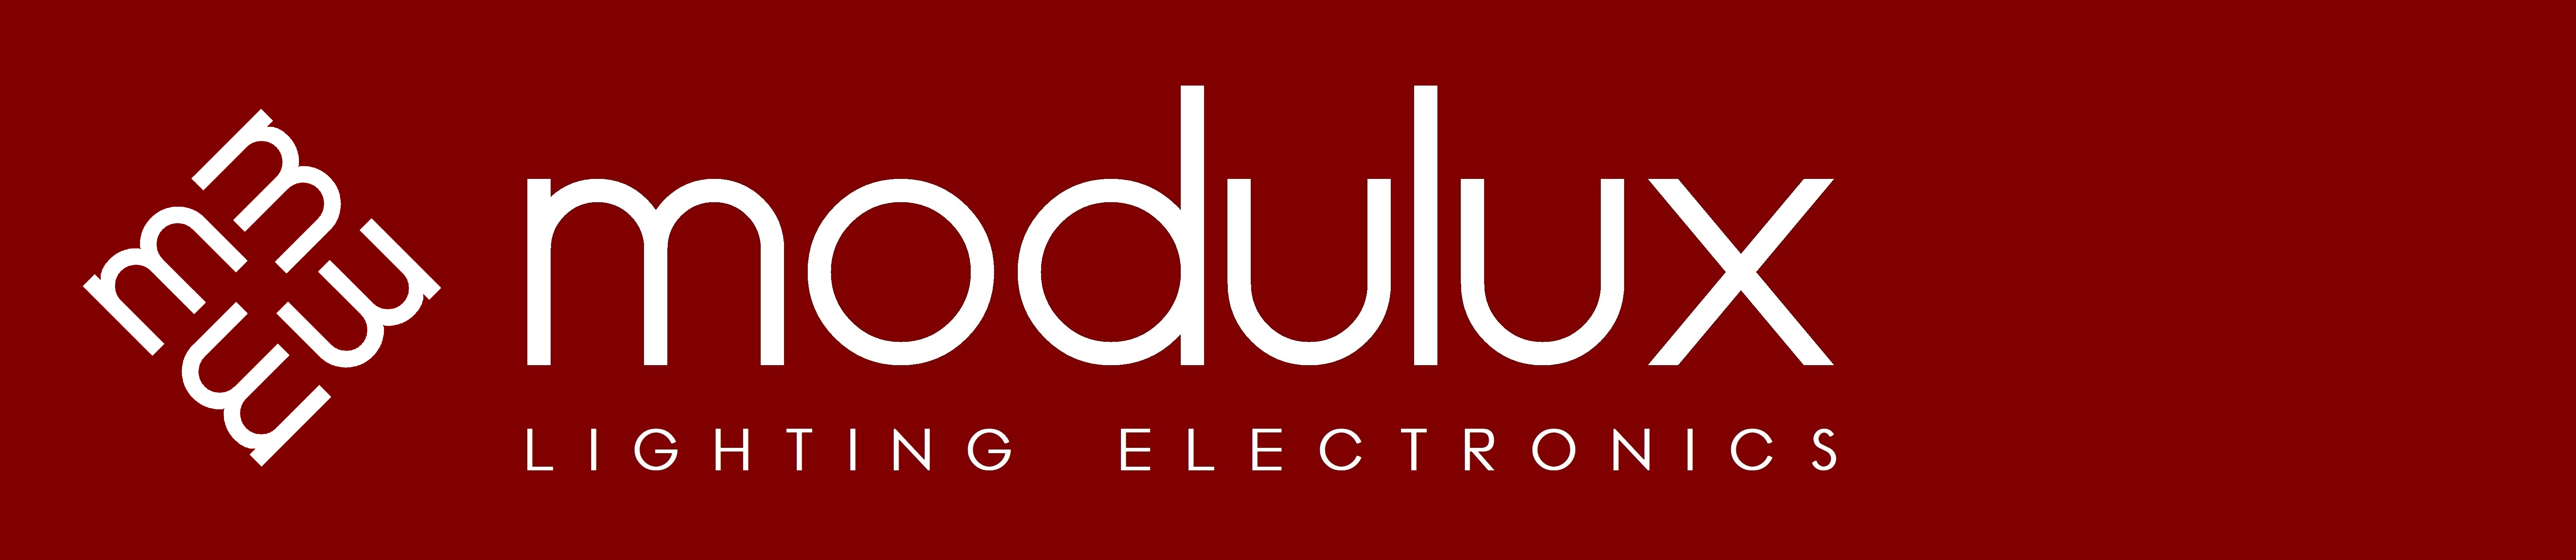 Modulux | Lighting Electronics